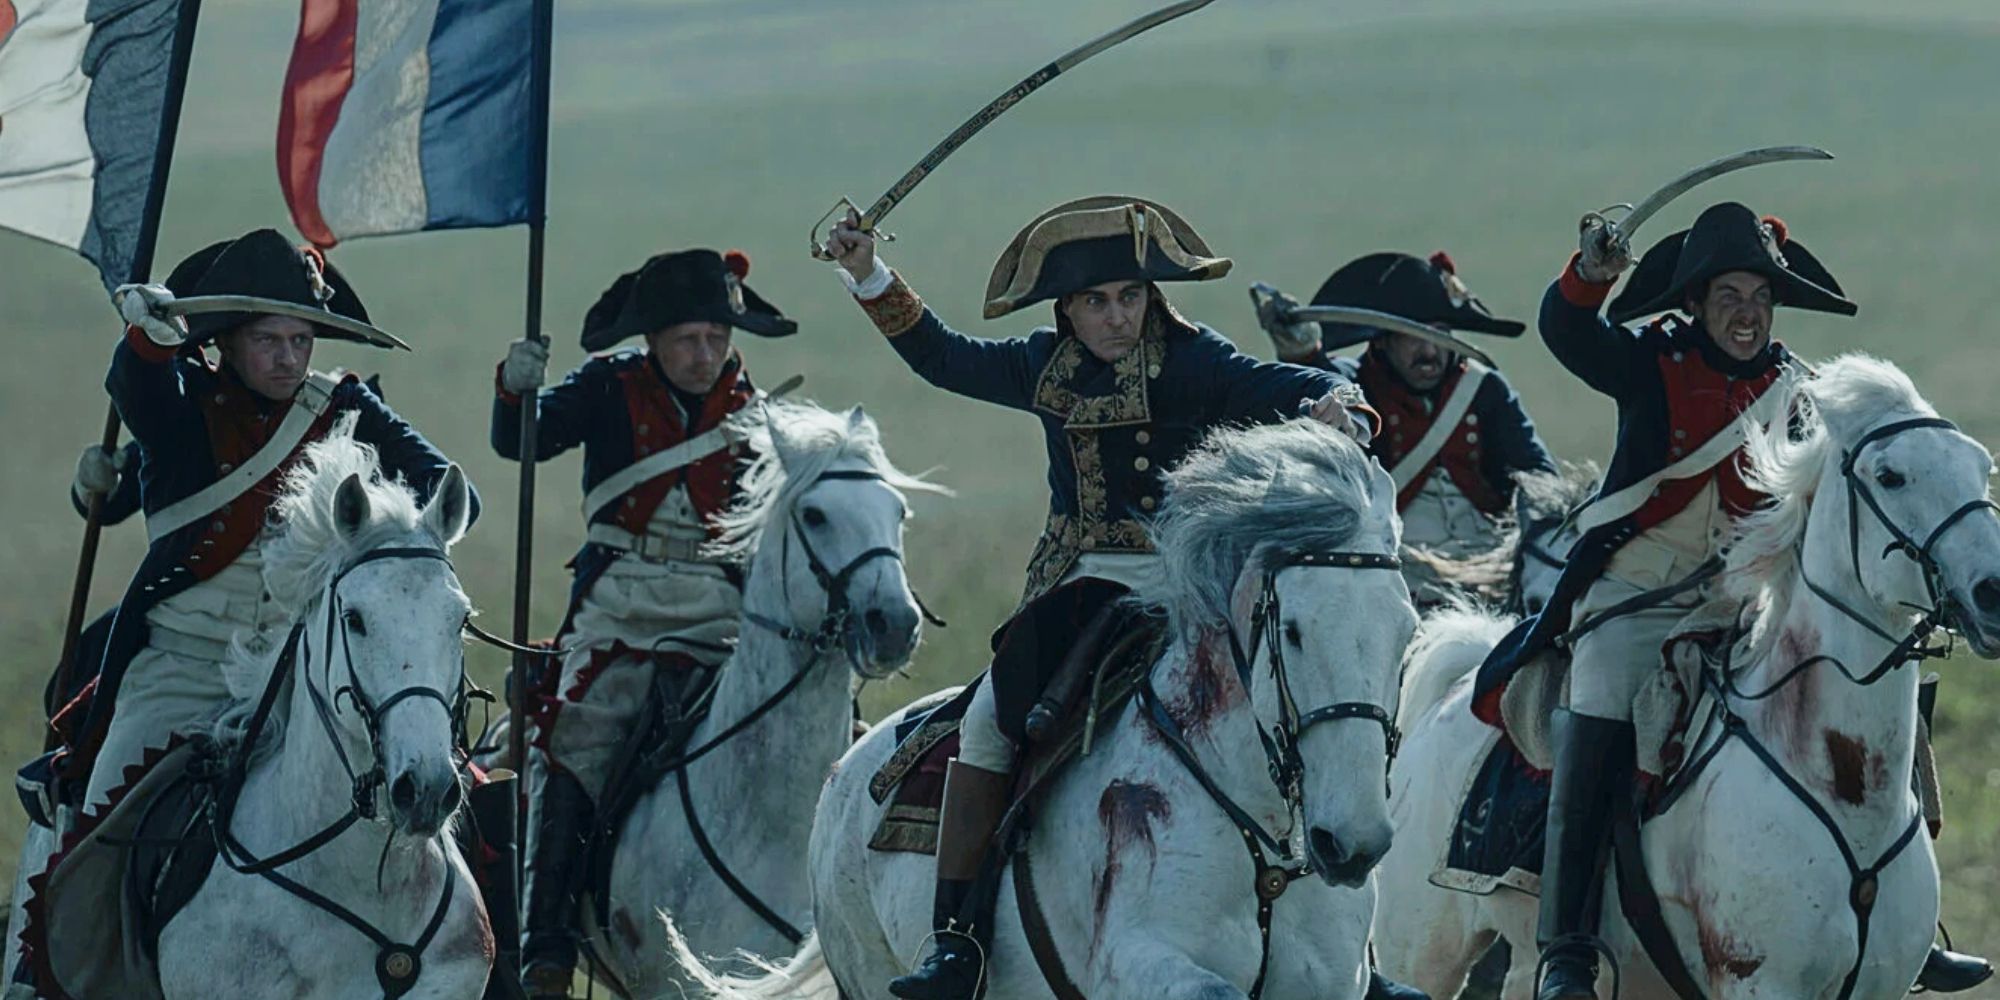 Joaquin Phoenix charging into battle as Napoleon